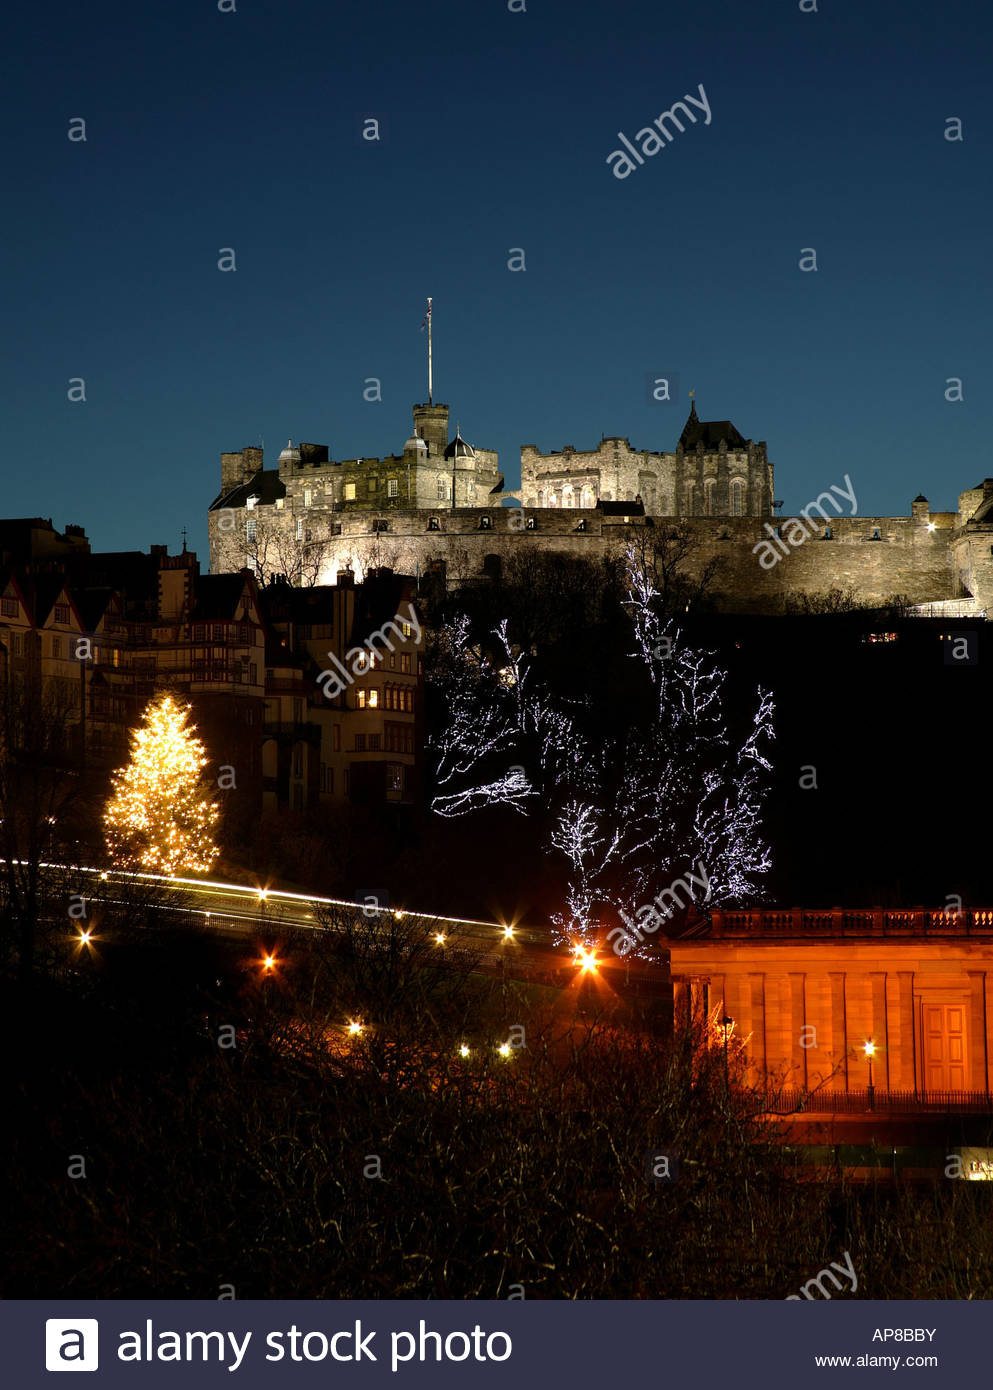 Christmas Scene With Illuminated Edinburgh Castle In The